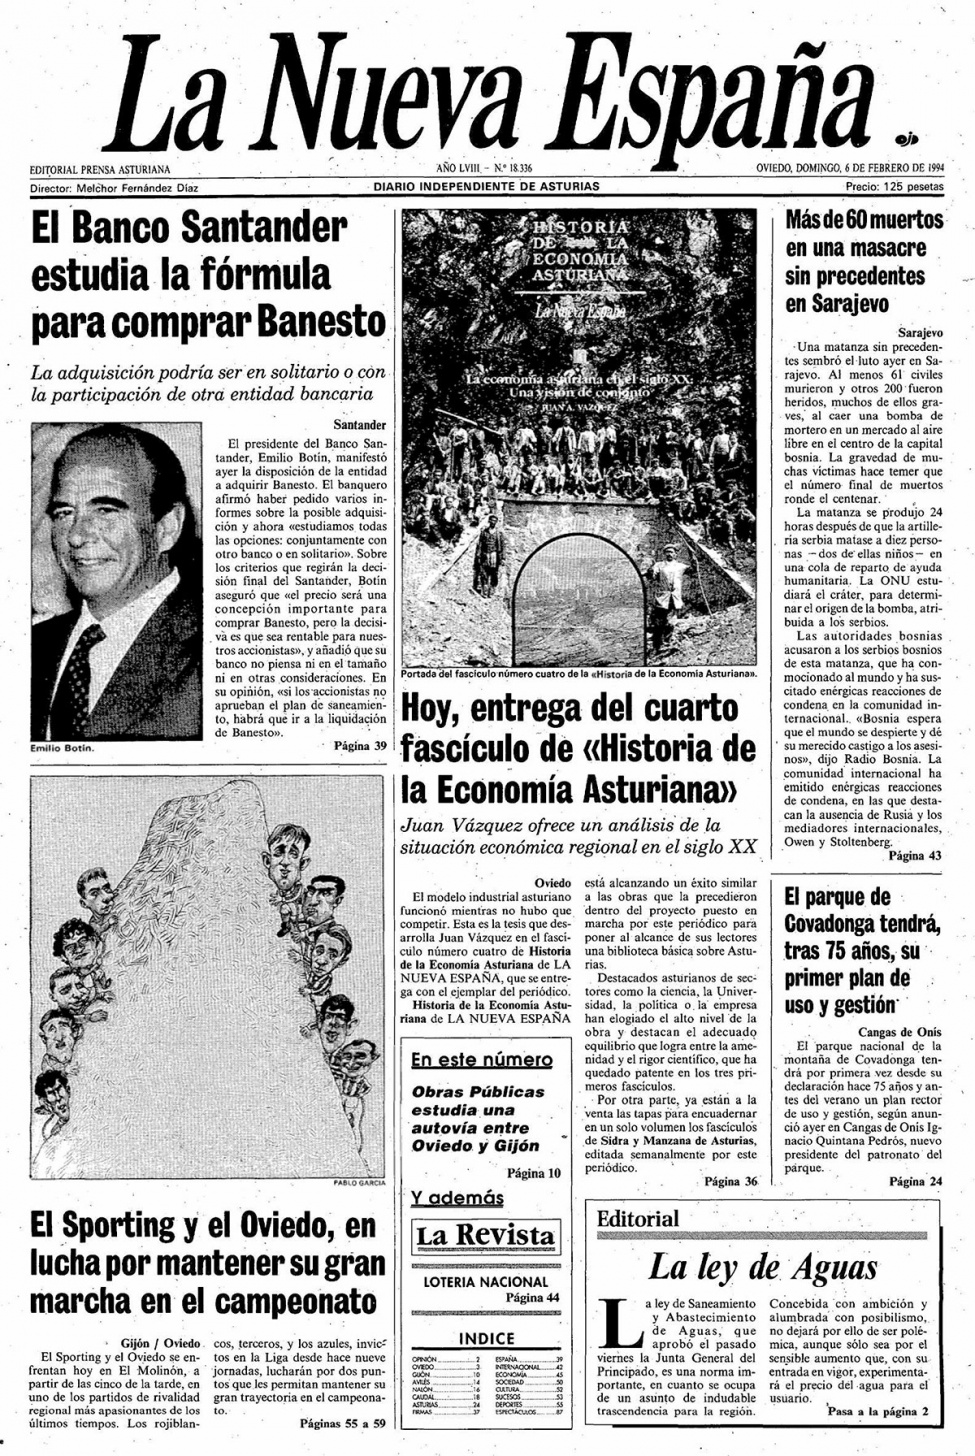 Portada del Domingo, 6 de Febrero de 1994